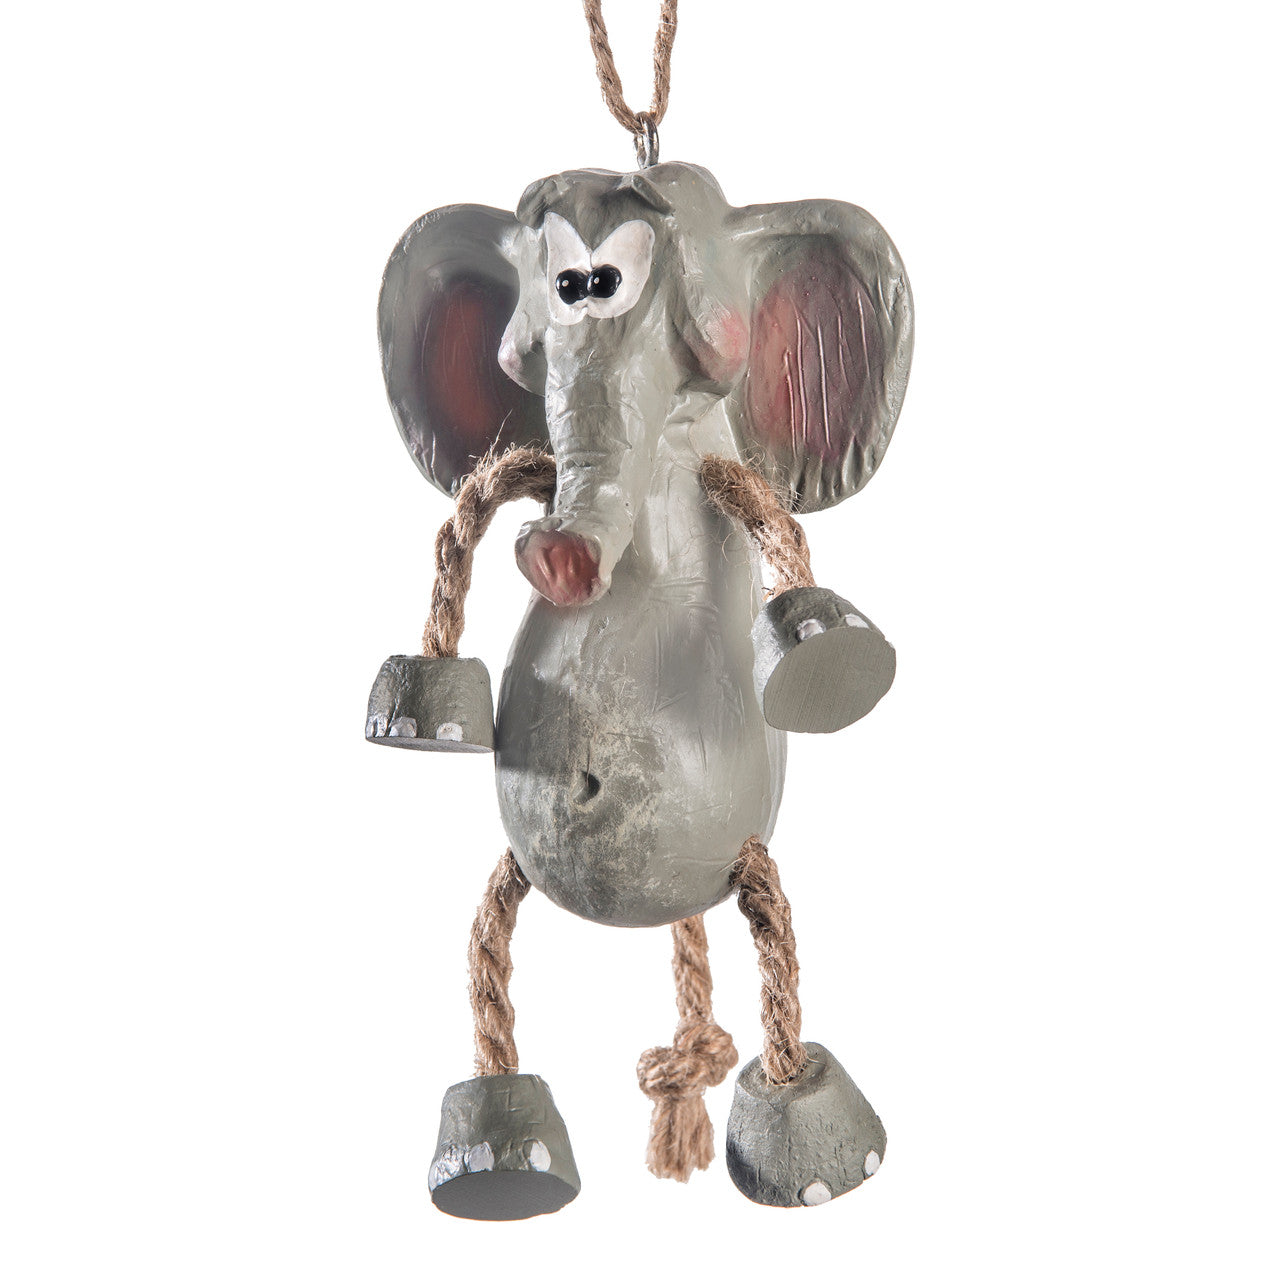 Bac 002 Elephant Ornament Set of 3